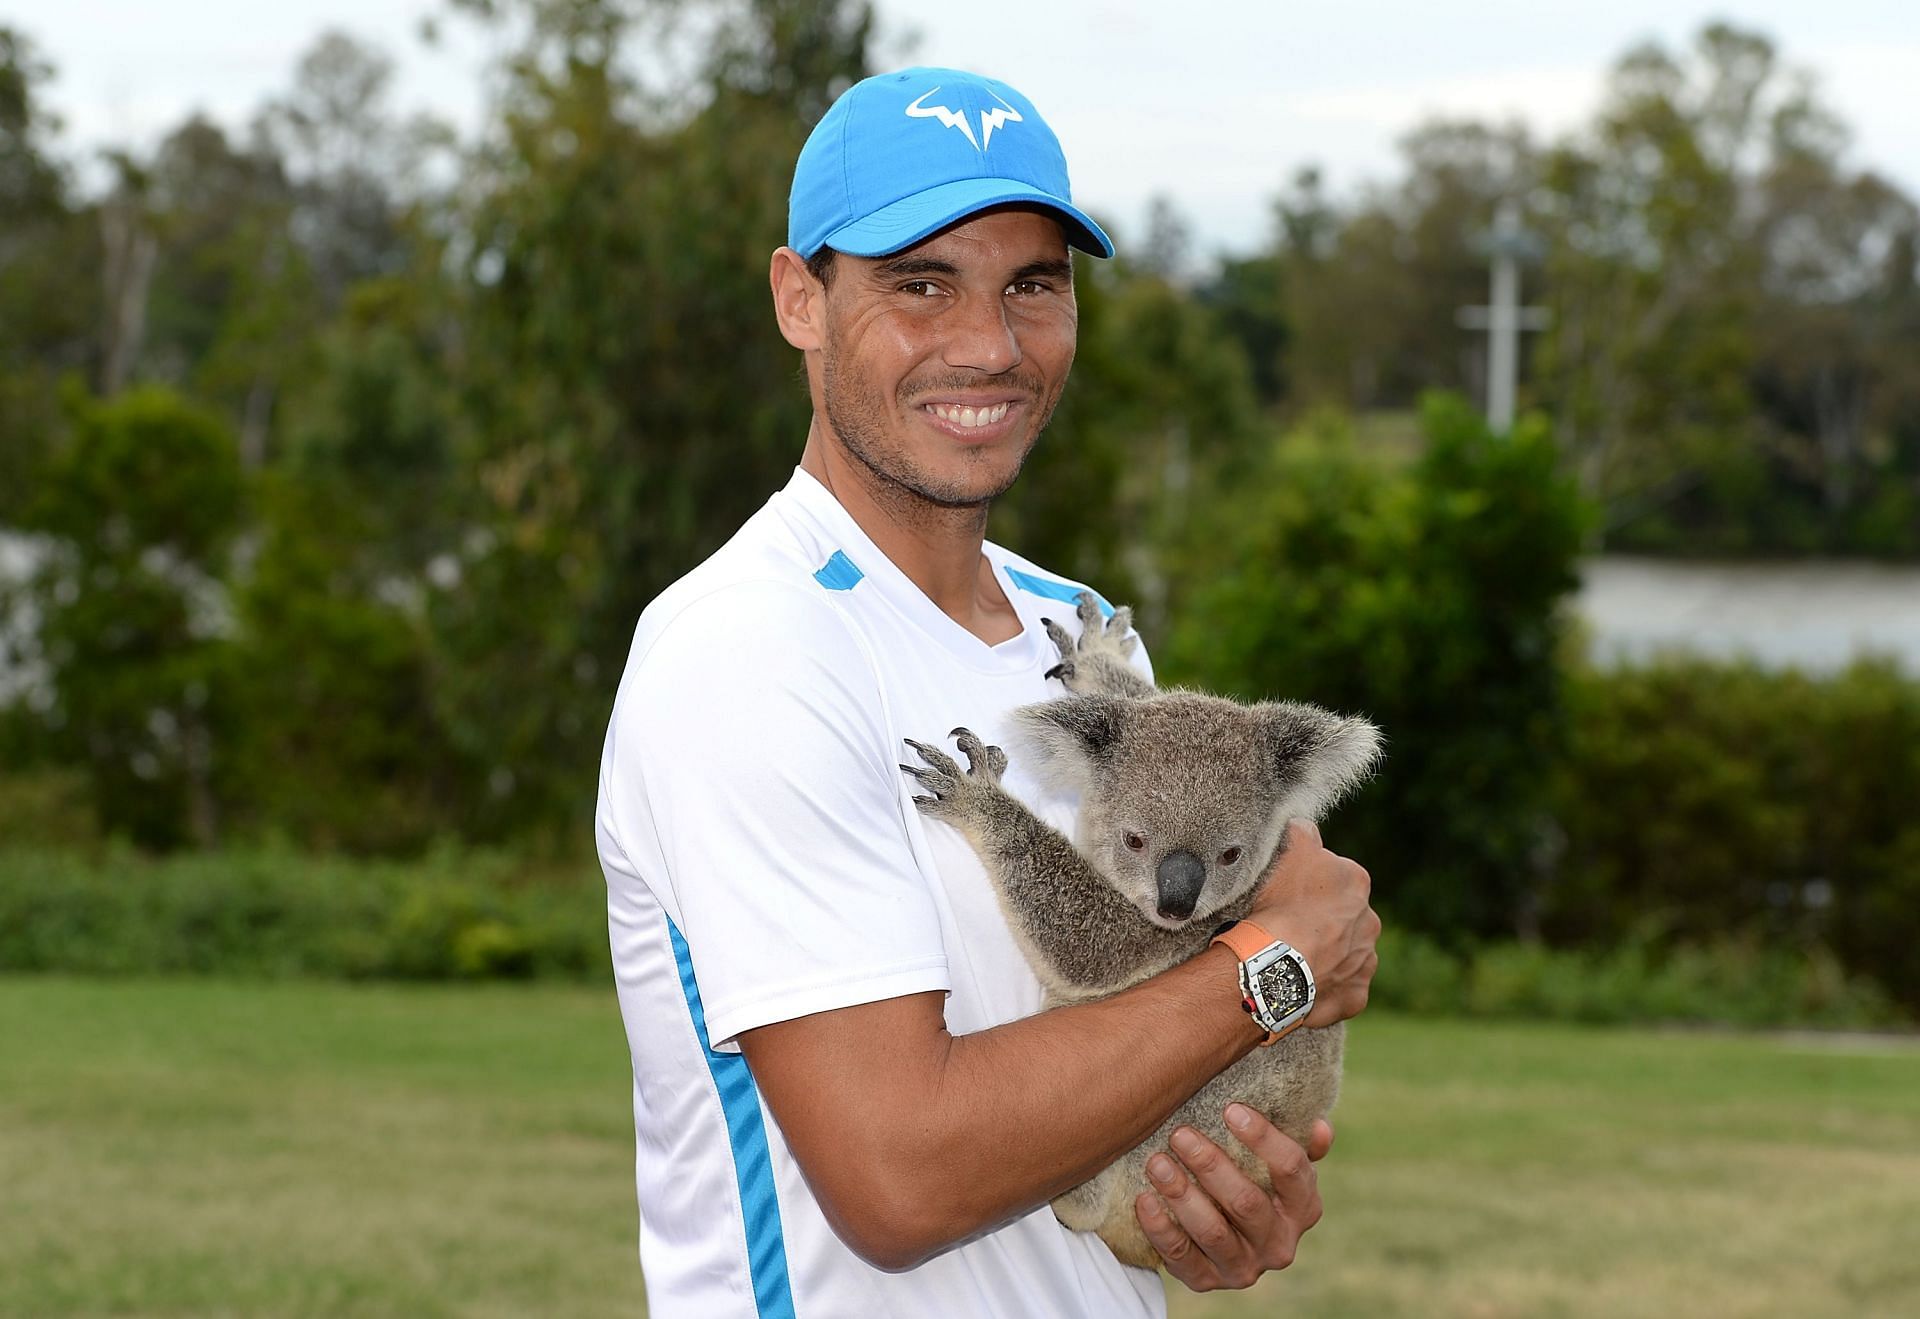 Rafael Nadal posing with a koala in Brisbane